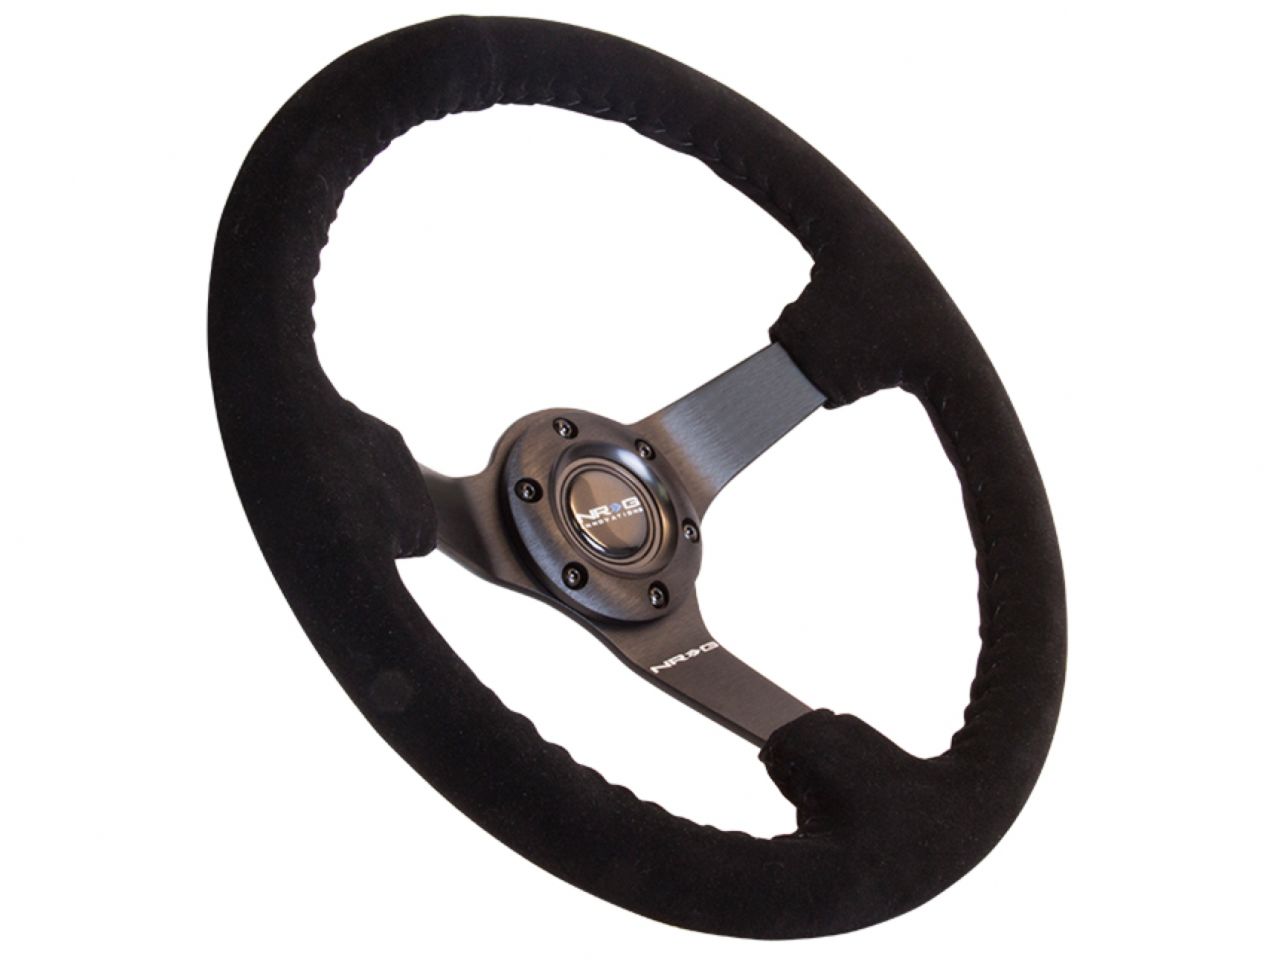 NRG Reinforced Steering Wheel-ODI Signature Race Style - 350mm